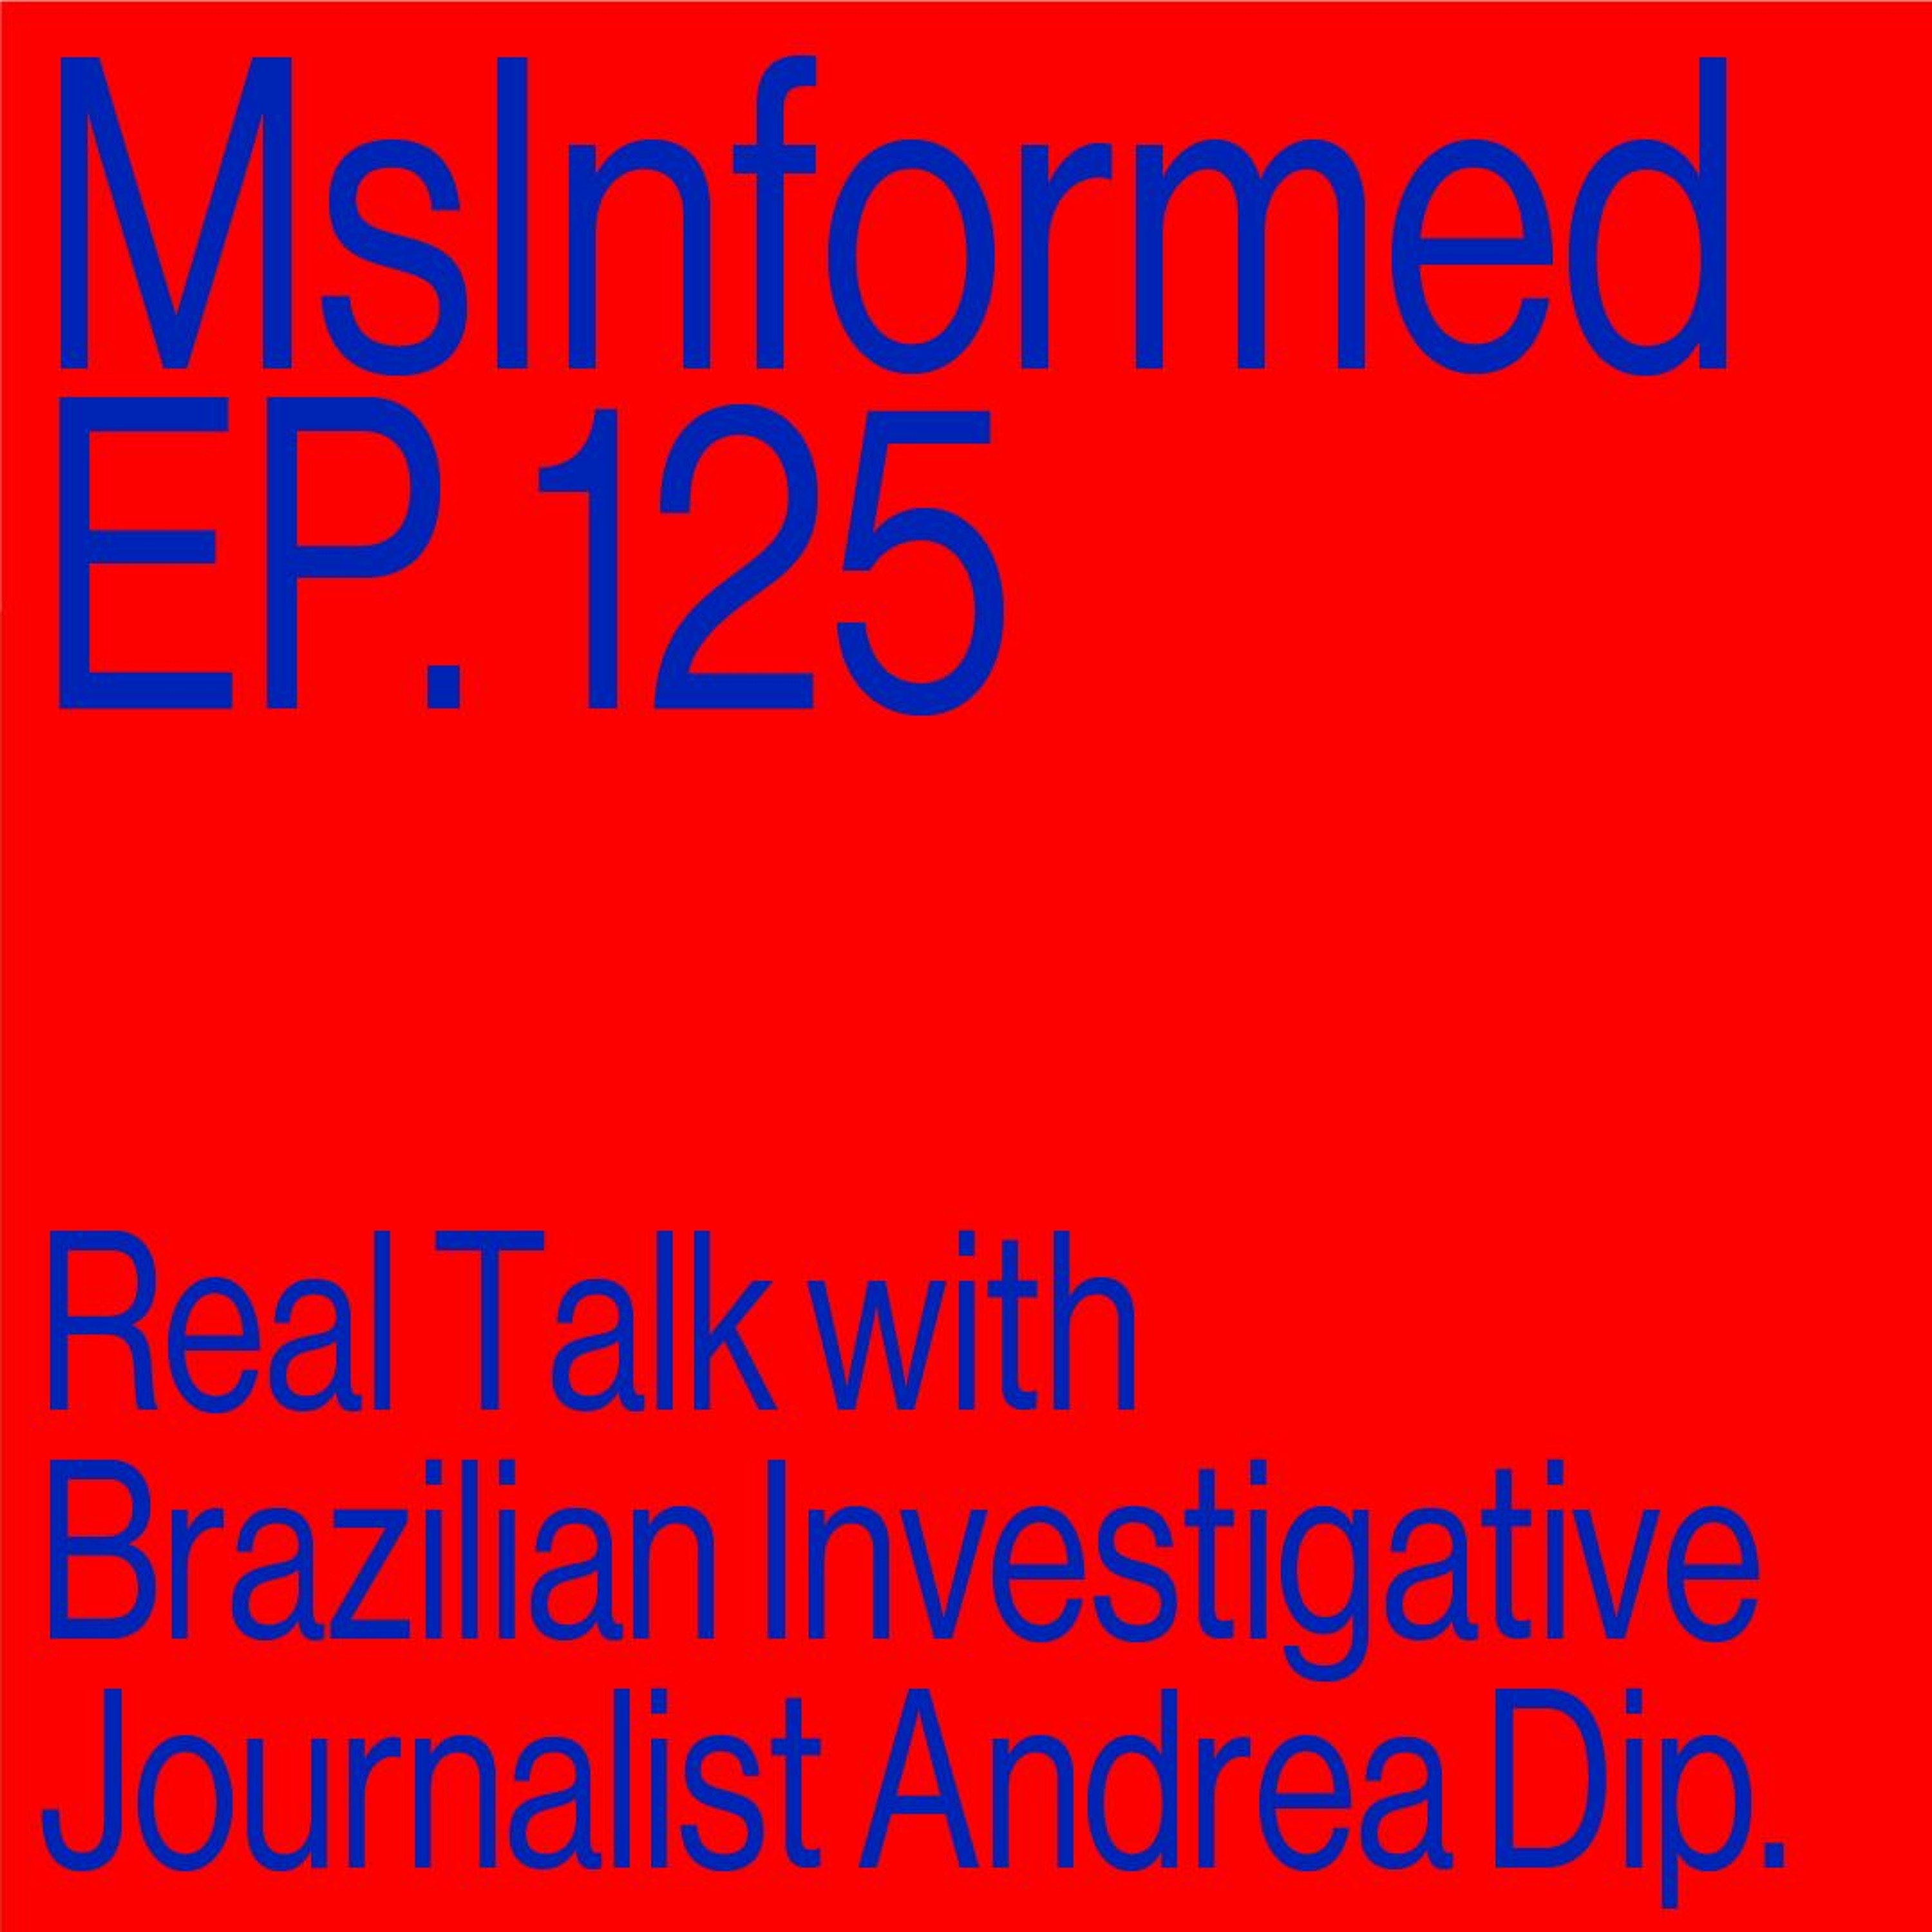 Episode 125: Real Talk With Brazilian Investigative Journalist Andrea Dip